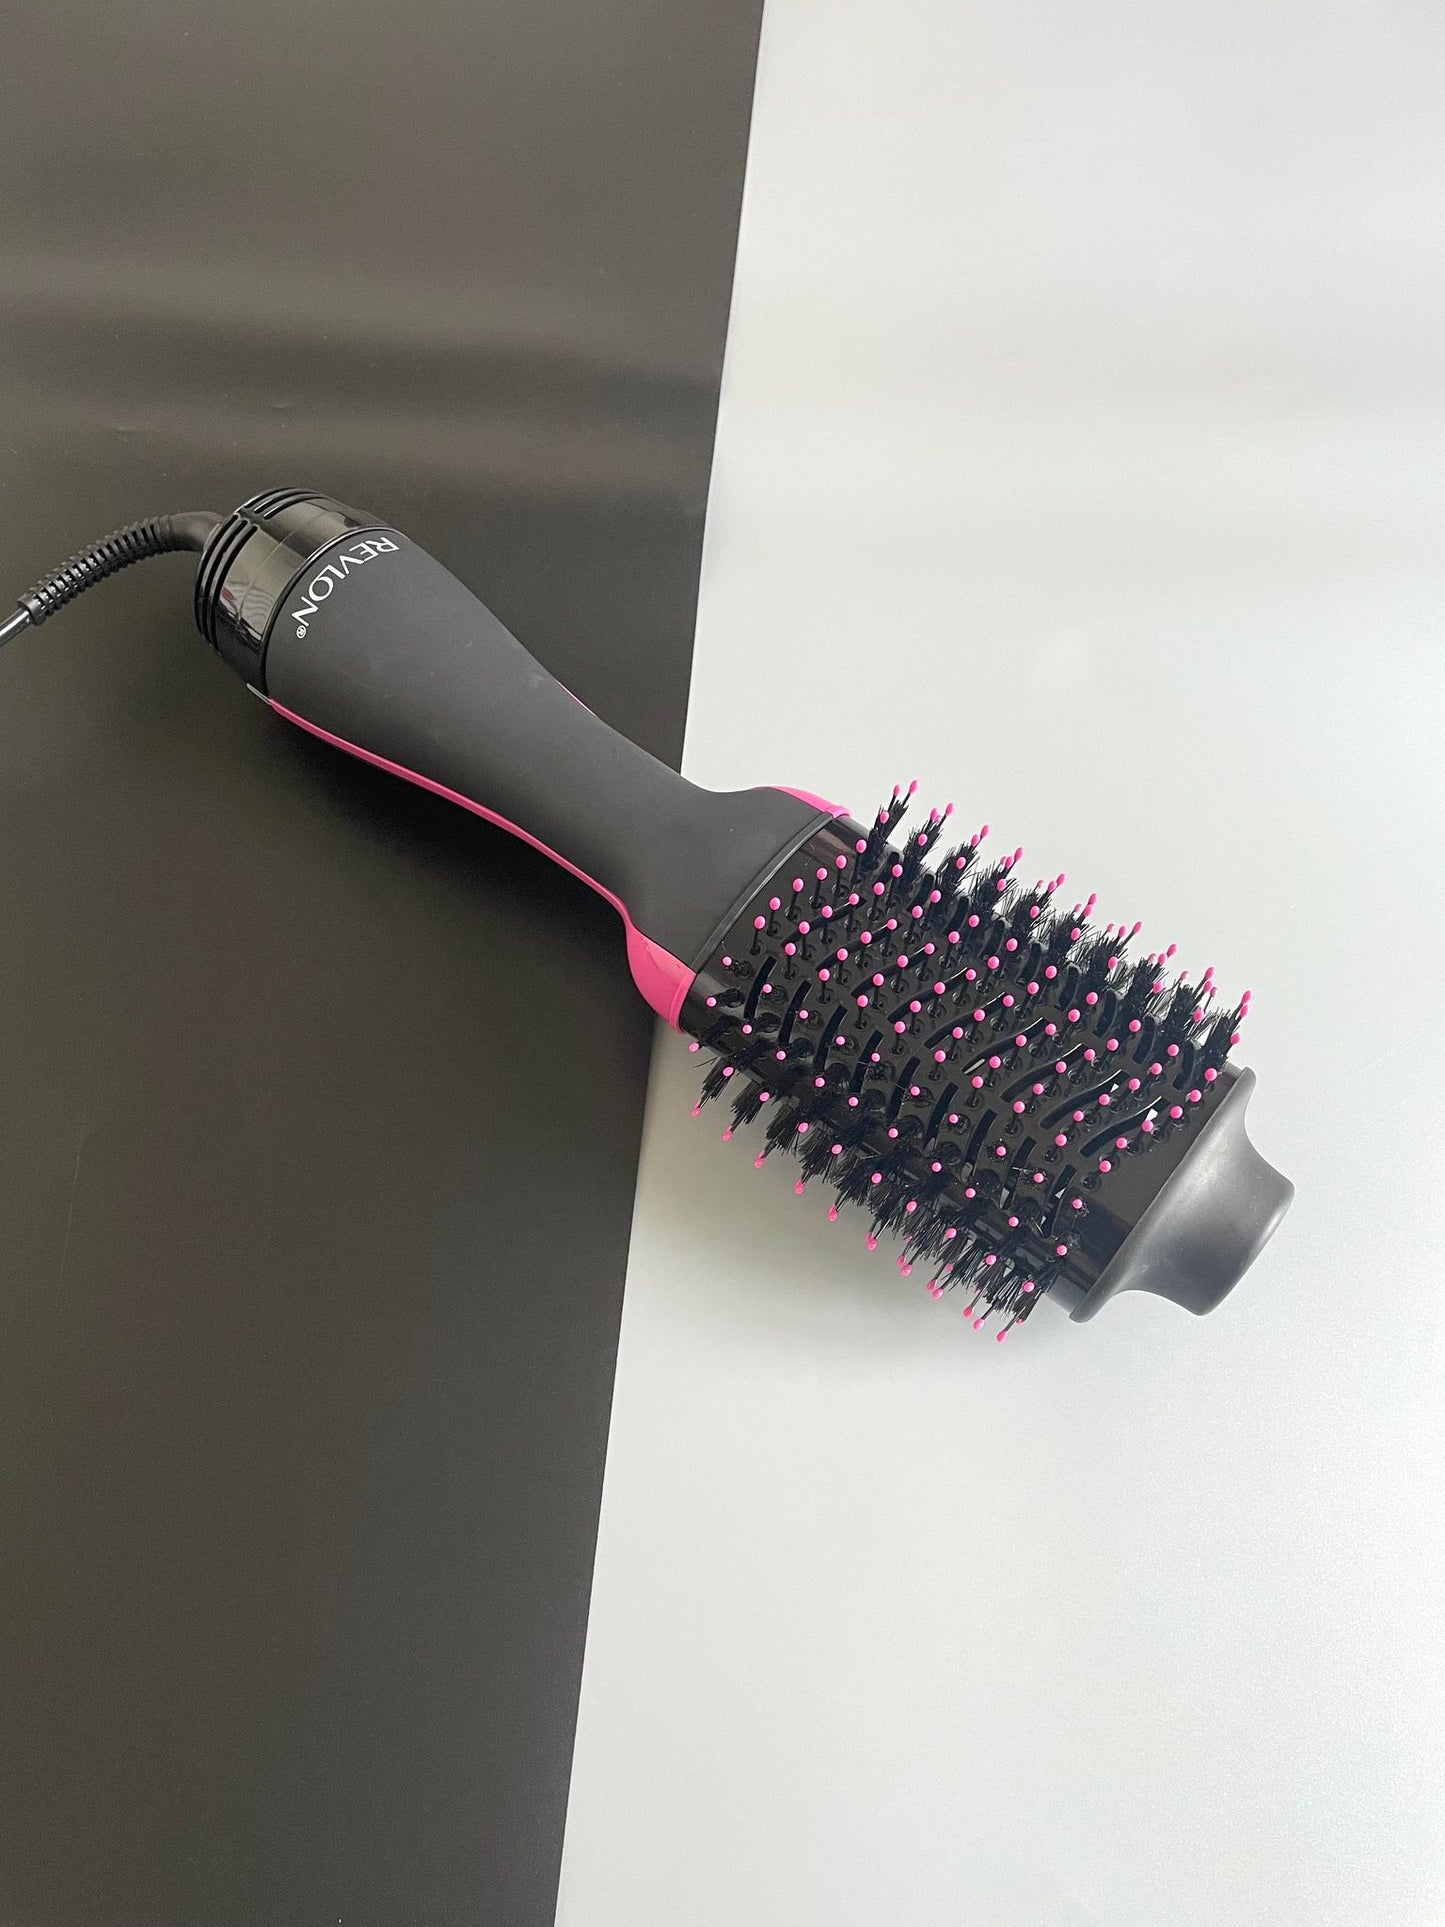 REVLON One-Step Volumizer Original 1.0 Hair Dryer and Hot Air Brush in Black